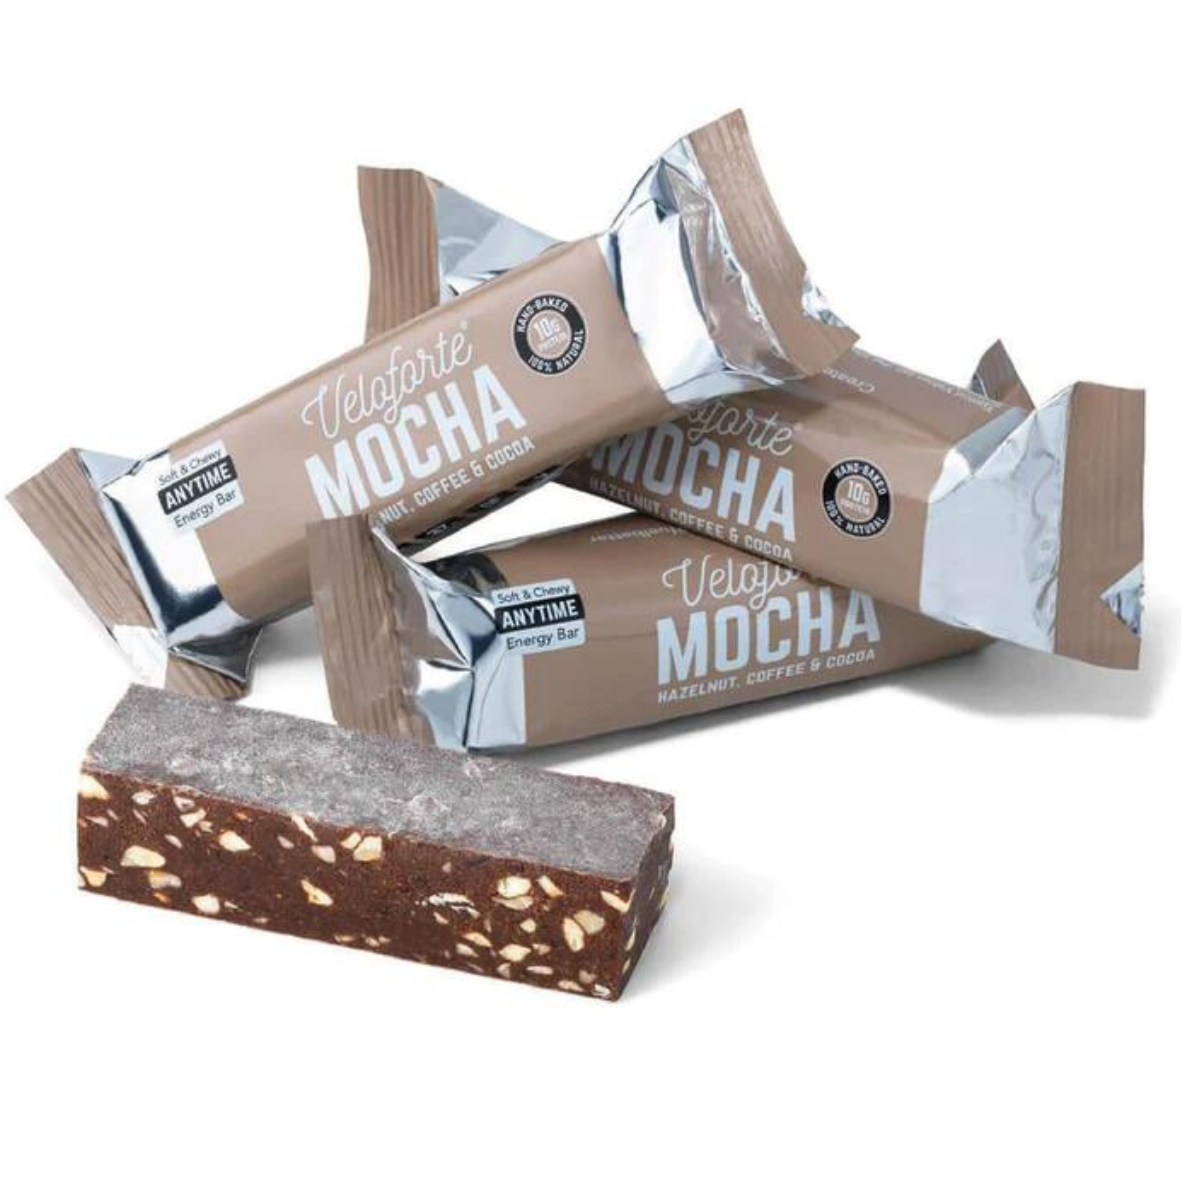 Veloforte - Protein Bar - Mocha (Hazelnut, Coffee & Cocoa)